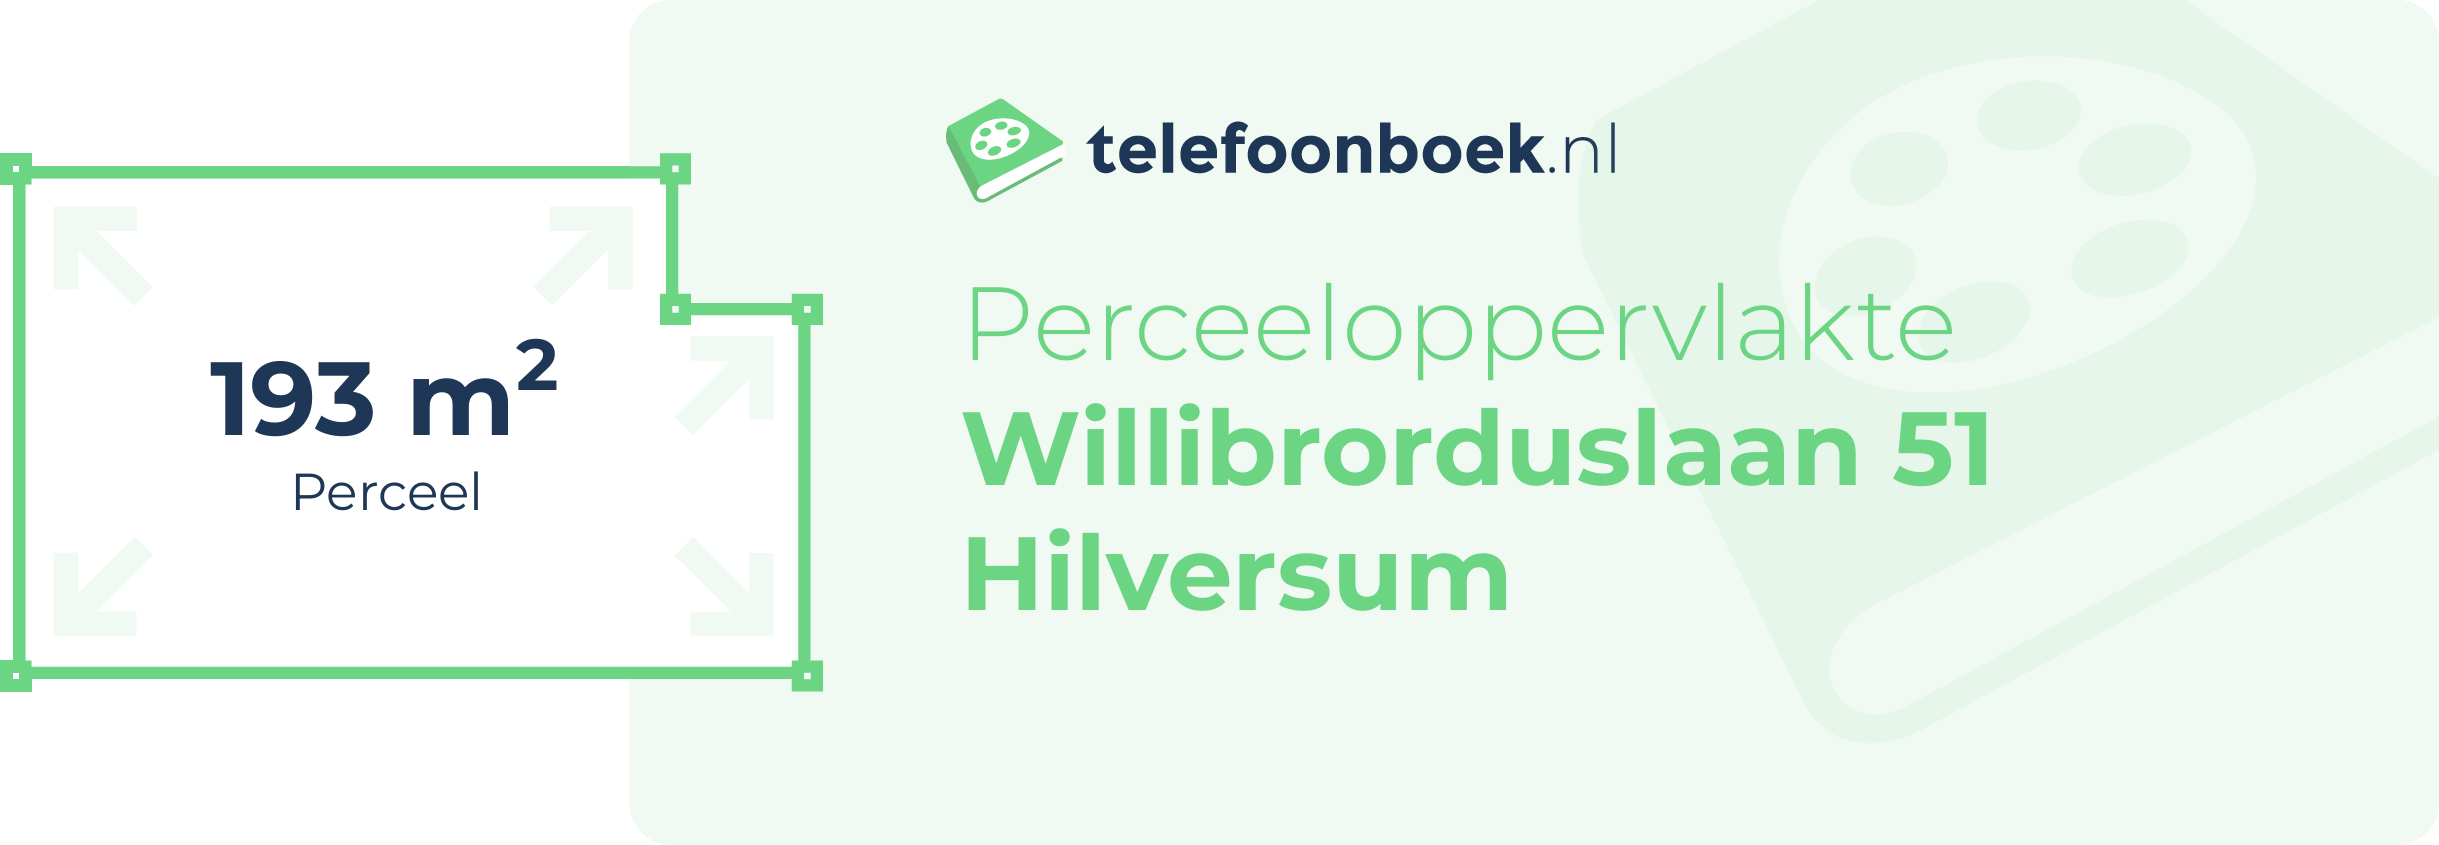 Perceeloppervlakte Willibrorduslaan 51 Hilversum